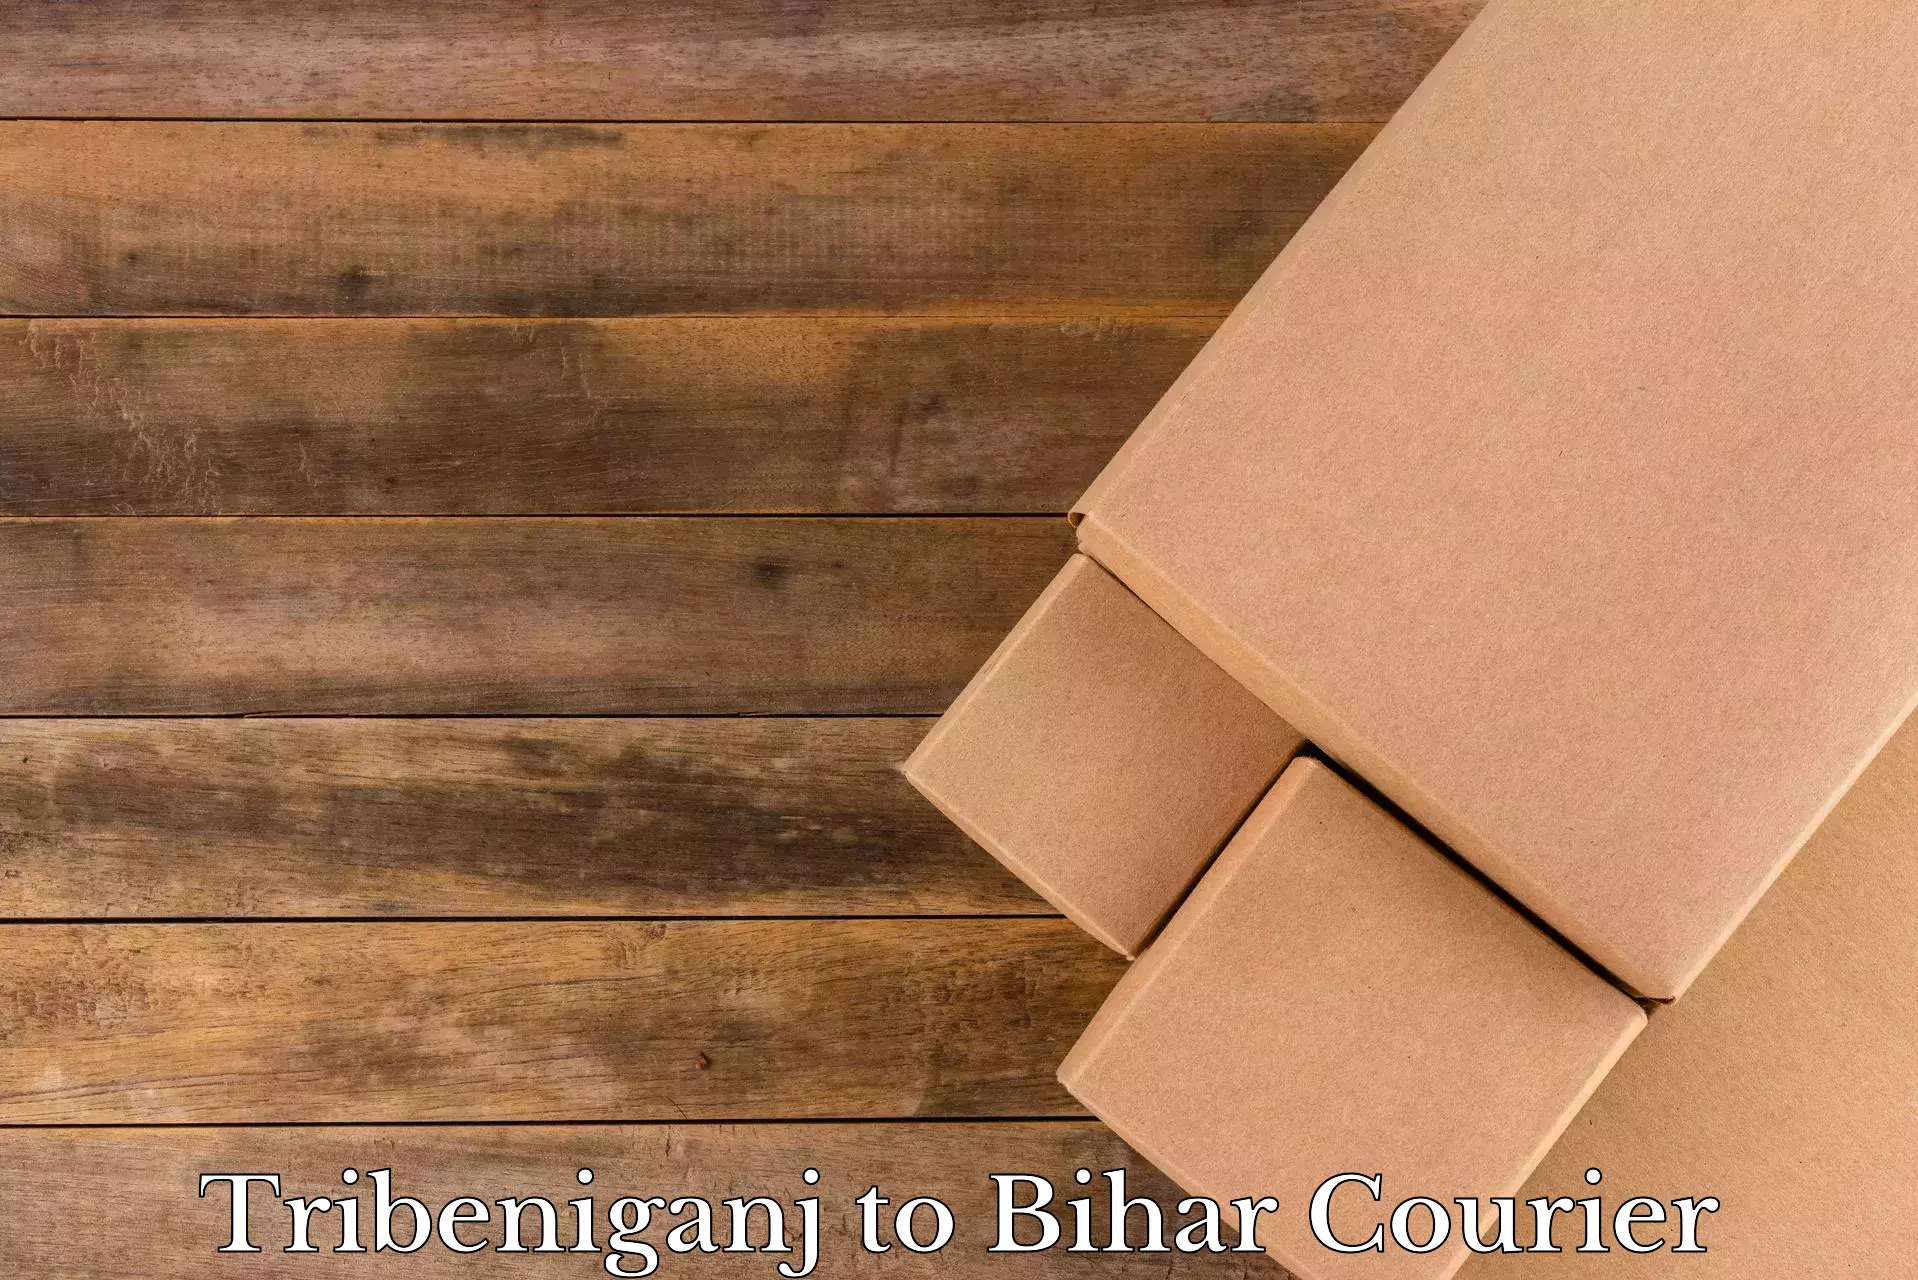 Professional moving company Tribeniganj to Bihar